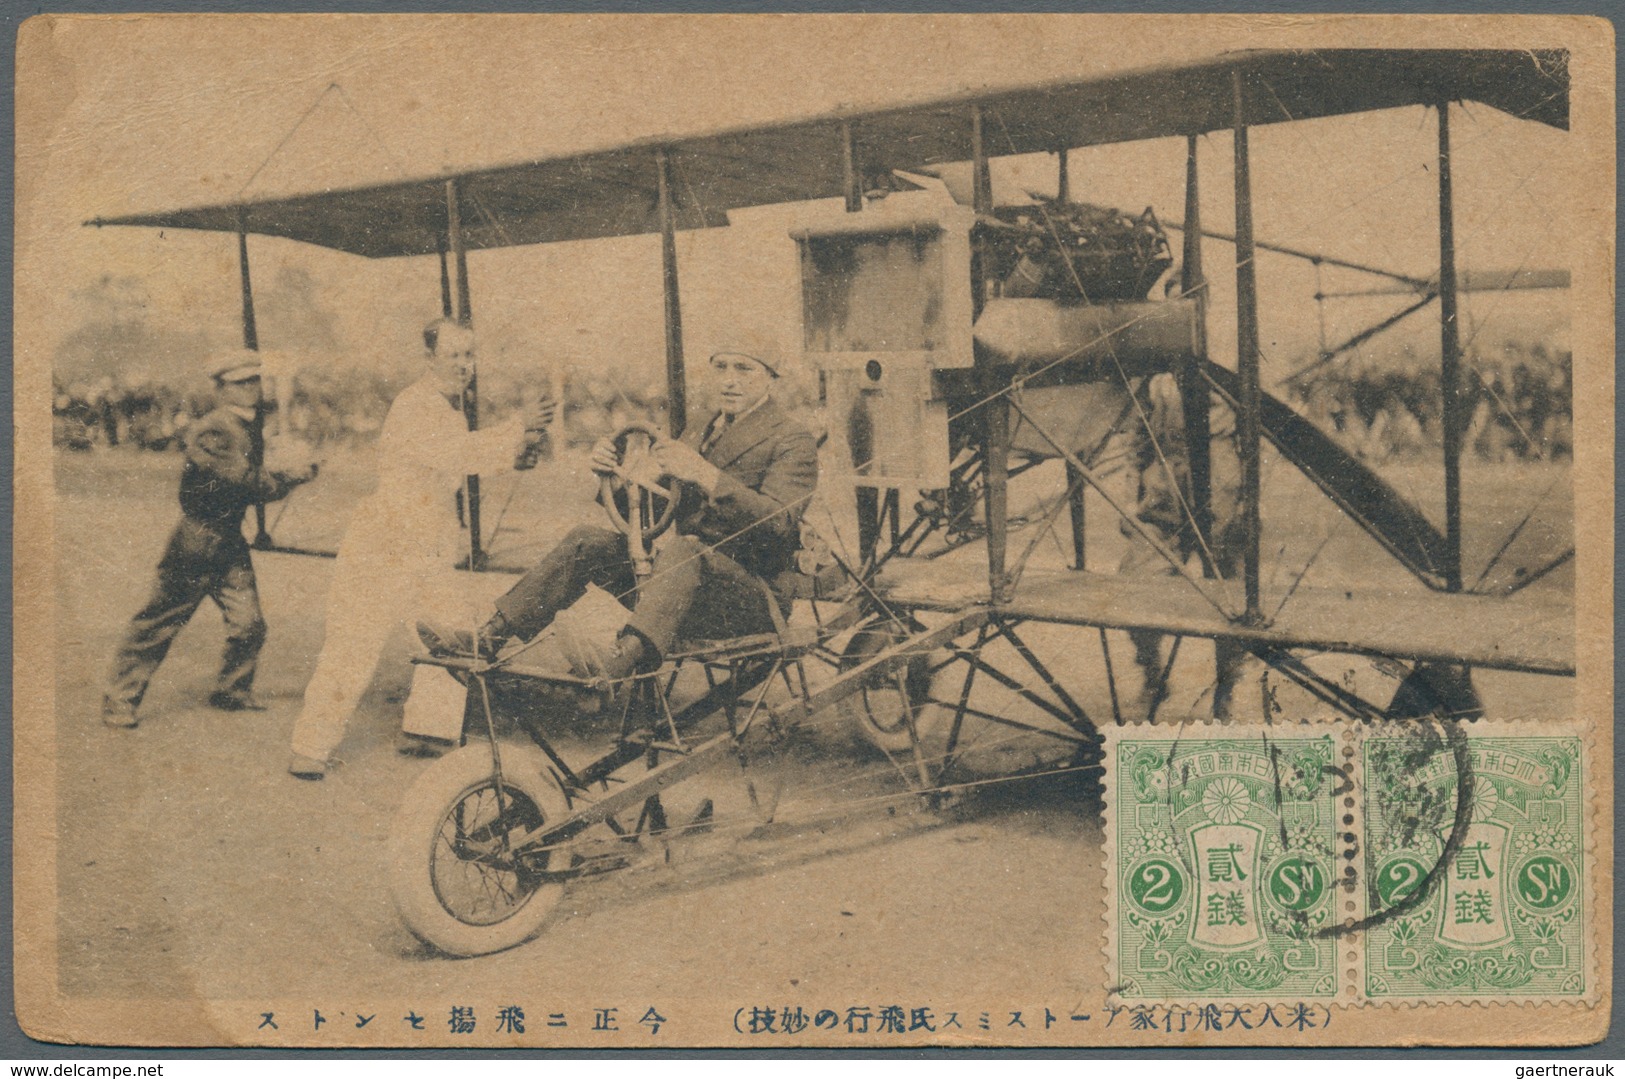 22911 Japan: 1914/18, the japanese pioneer aviator and WWI-pilot in France, Baron SHIGENO Kiyotake (1882-1